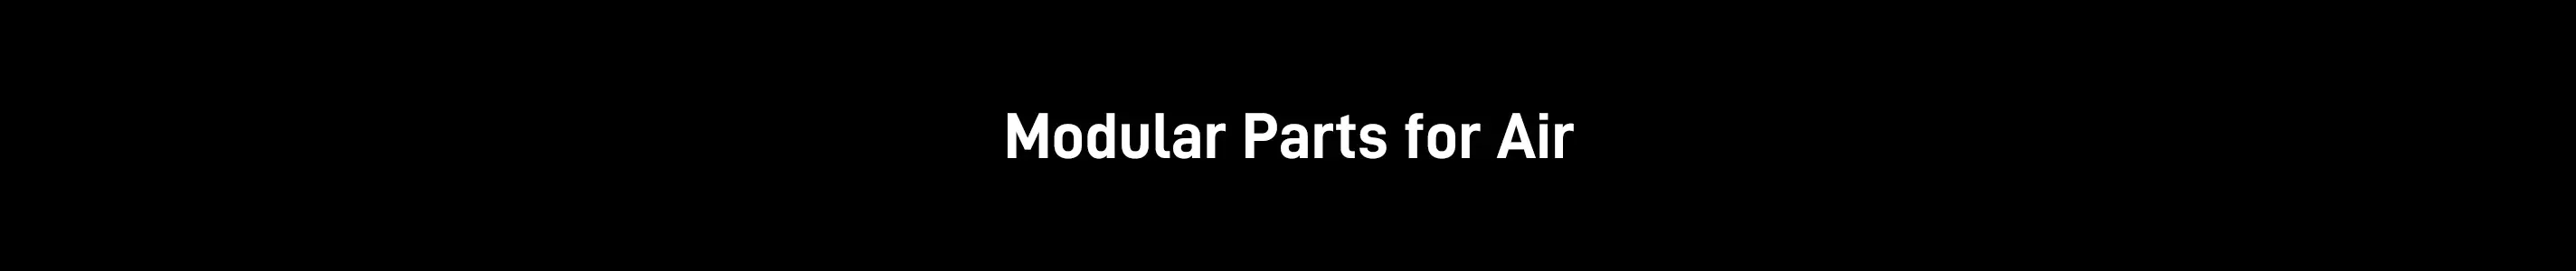 Modular Parts for Air